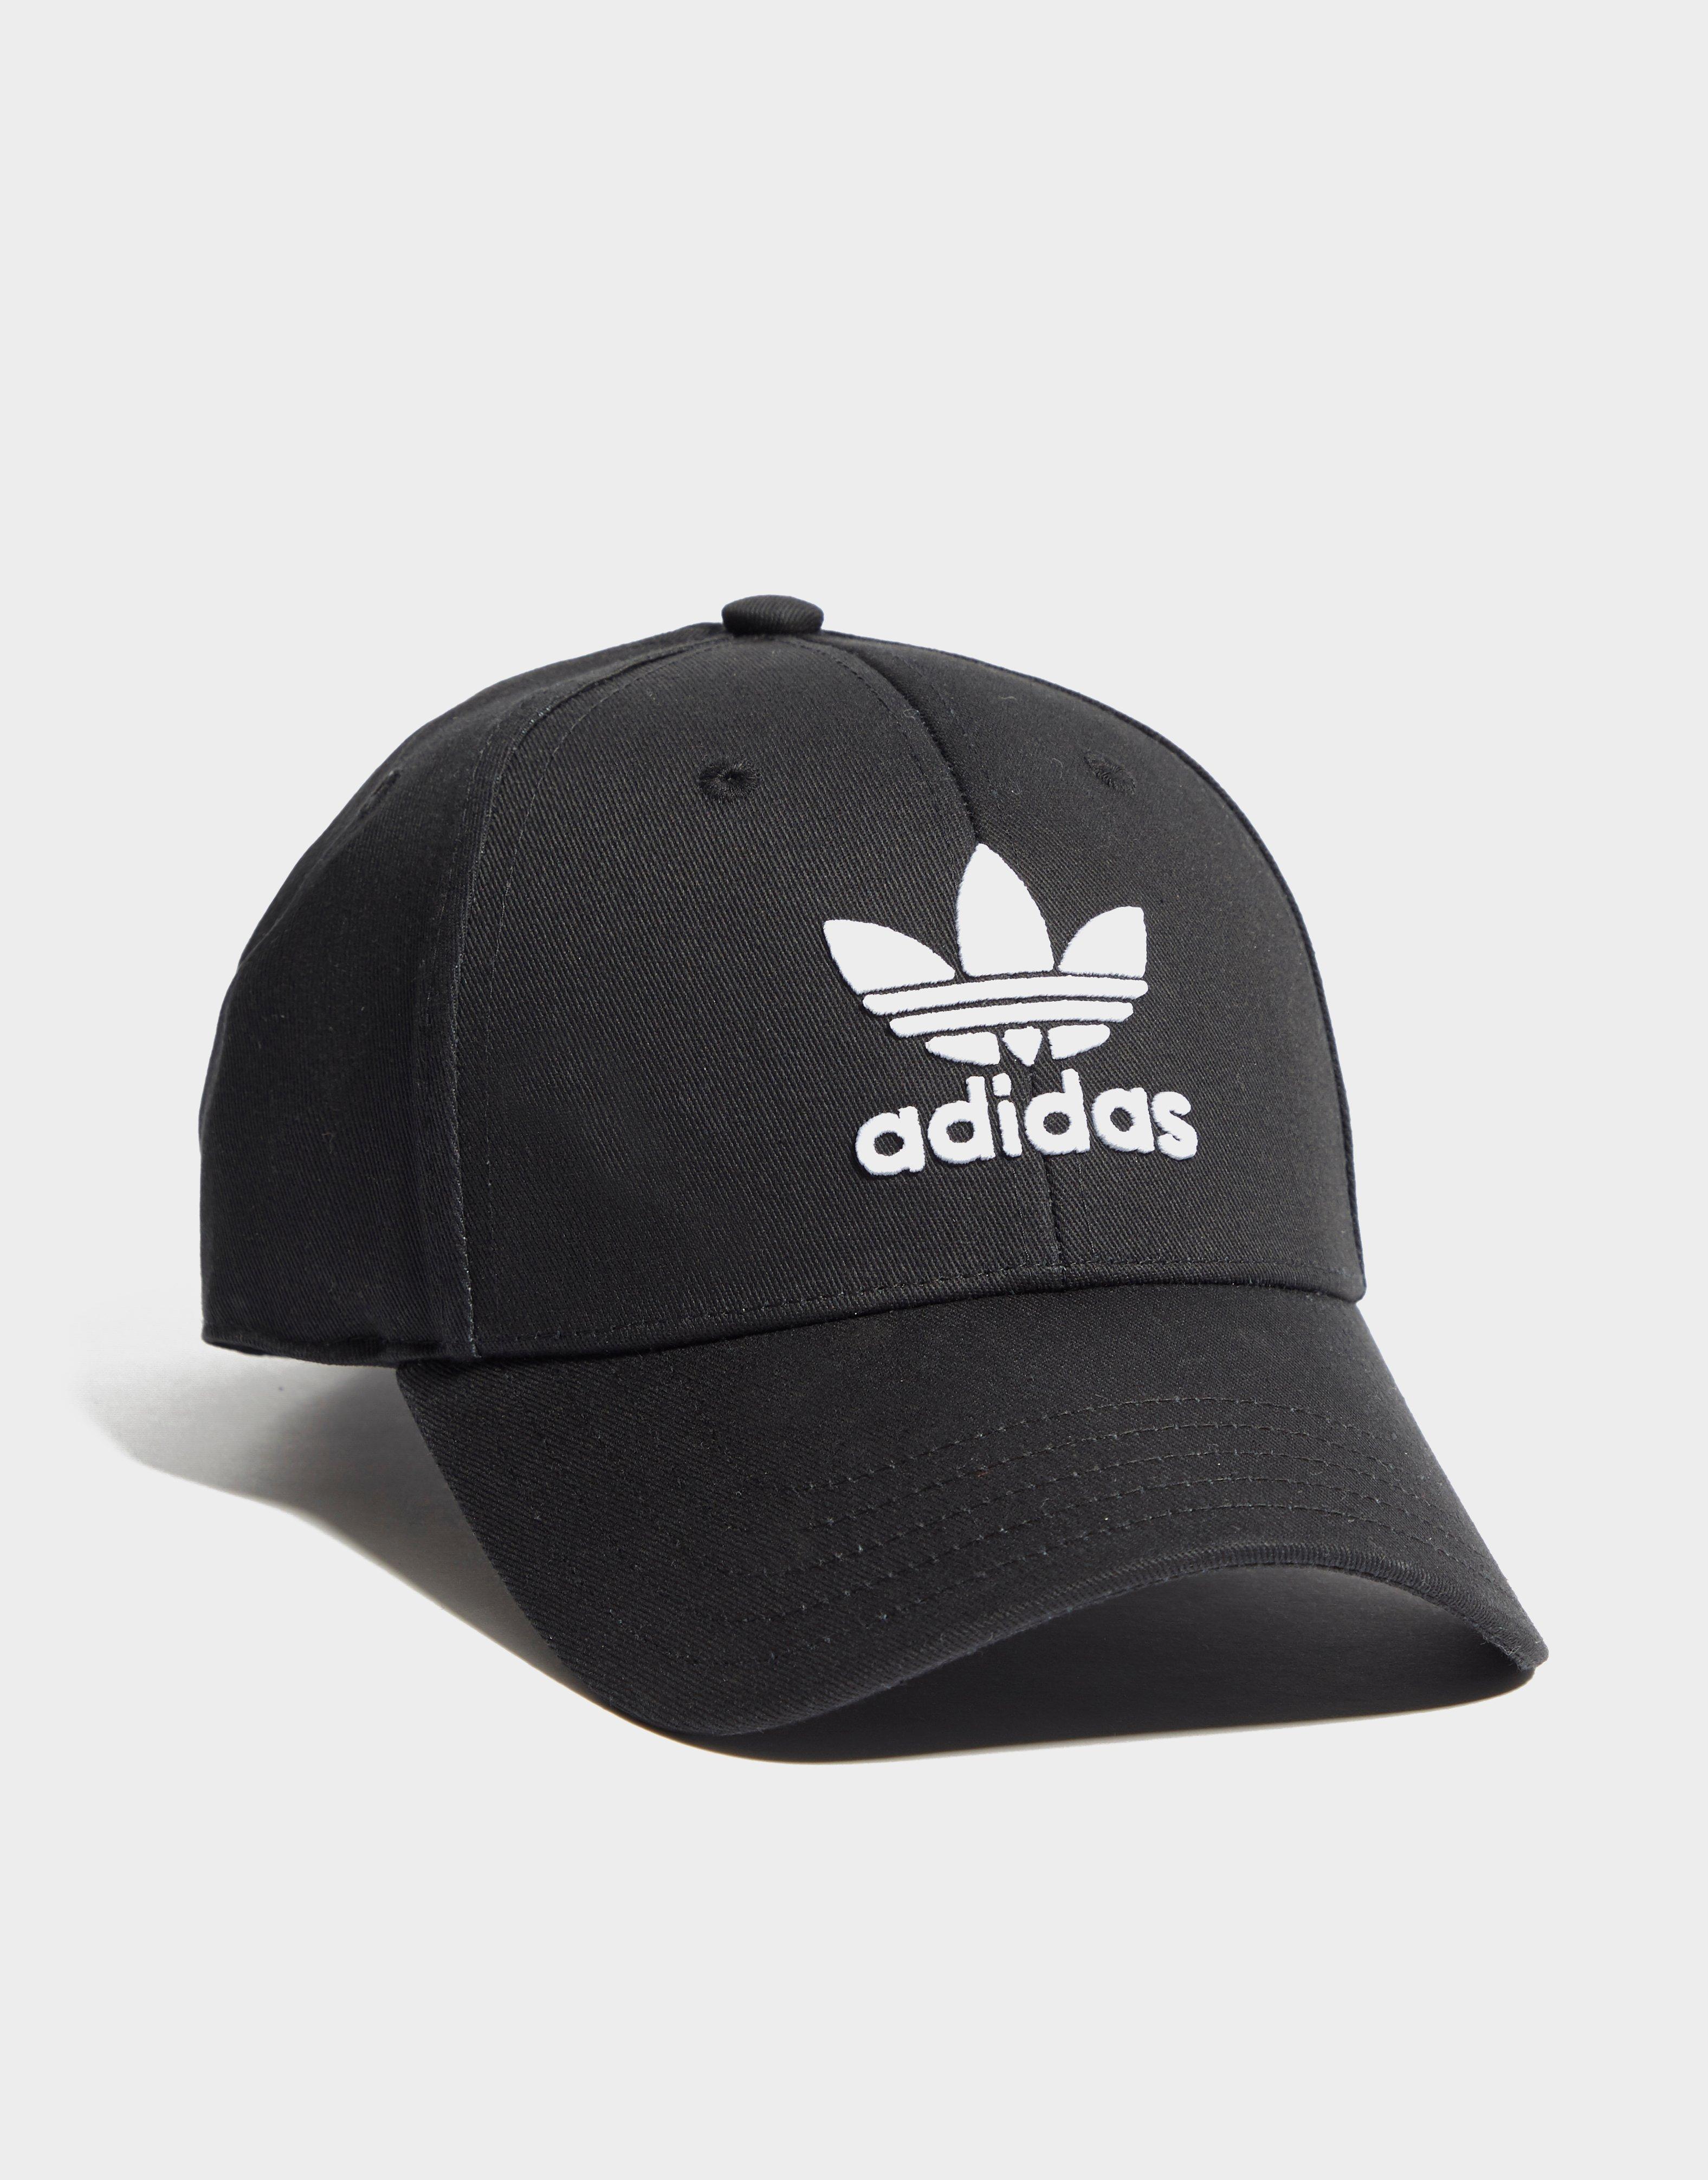 adidas head cap